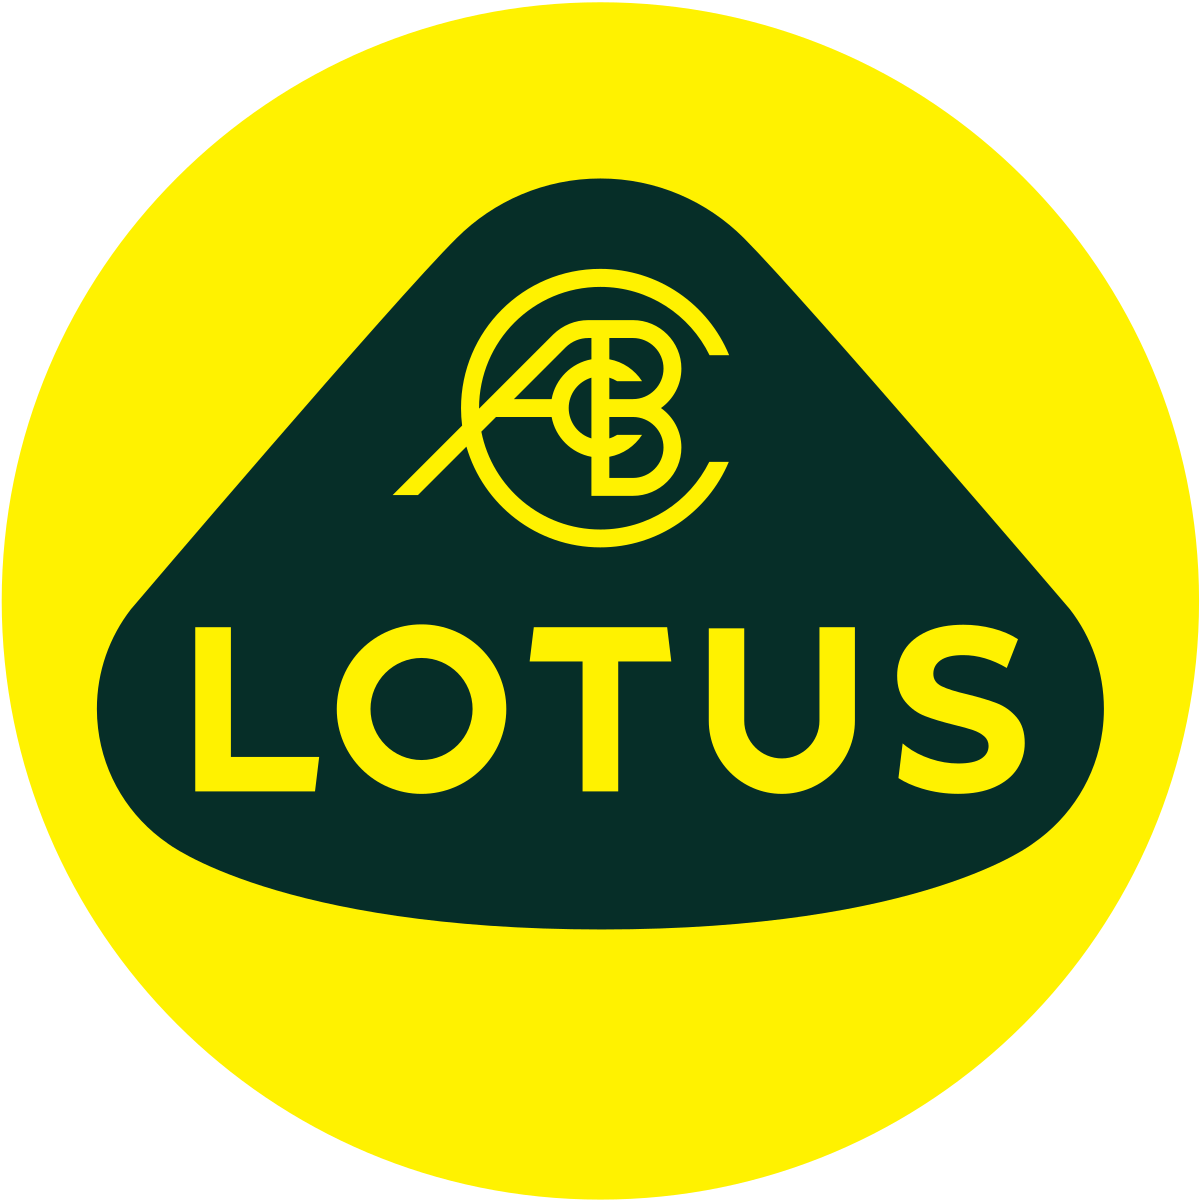 Lotus Cars - Wikipedia